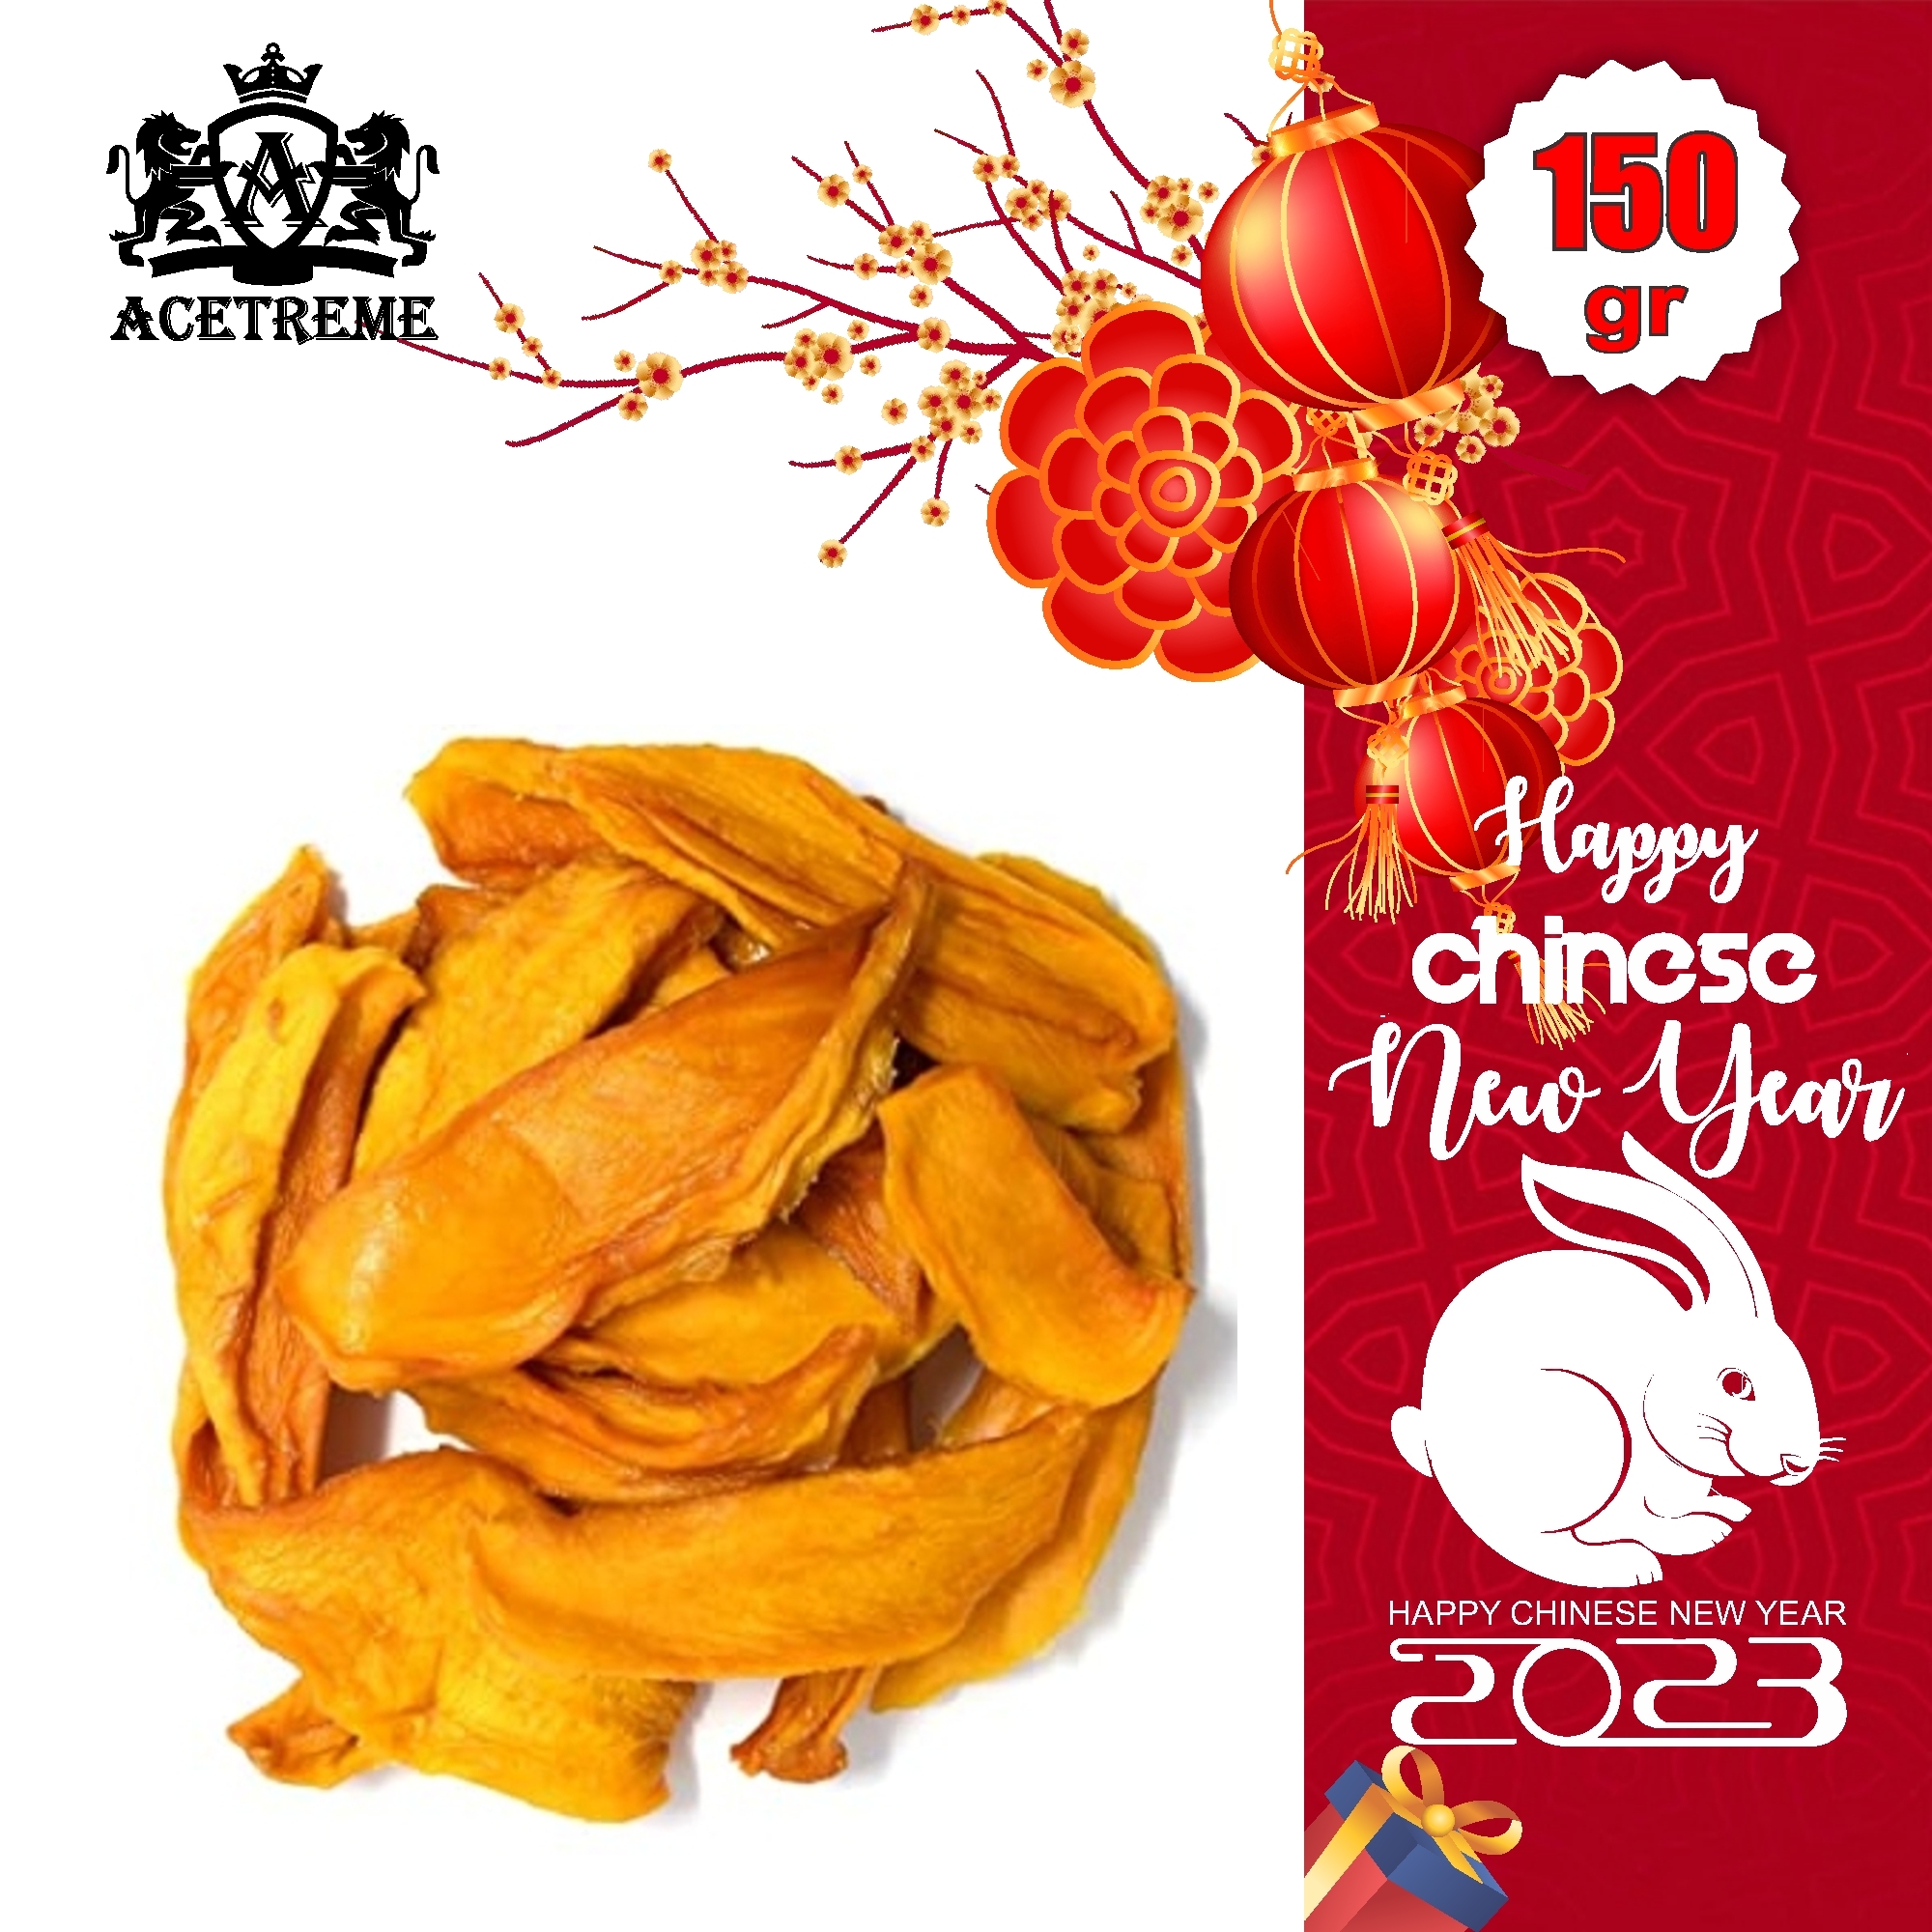 Chines new Year 2023-031-031